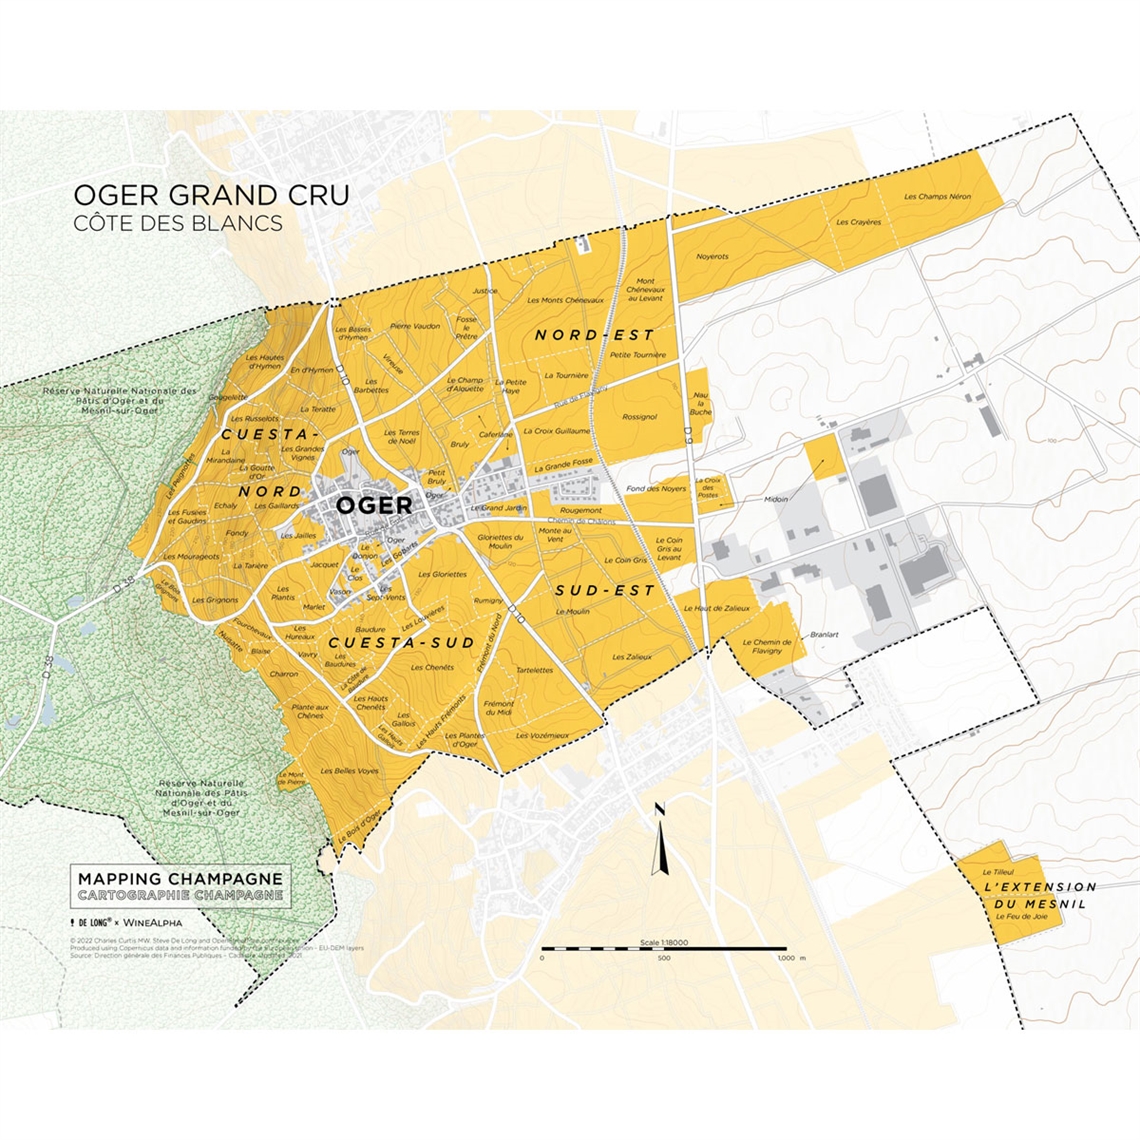 De Long’s Map of Côte des Blancs Champagne - Oger Grand Cru